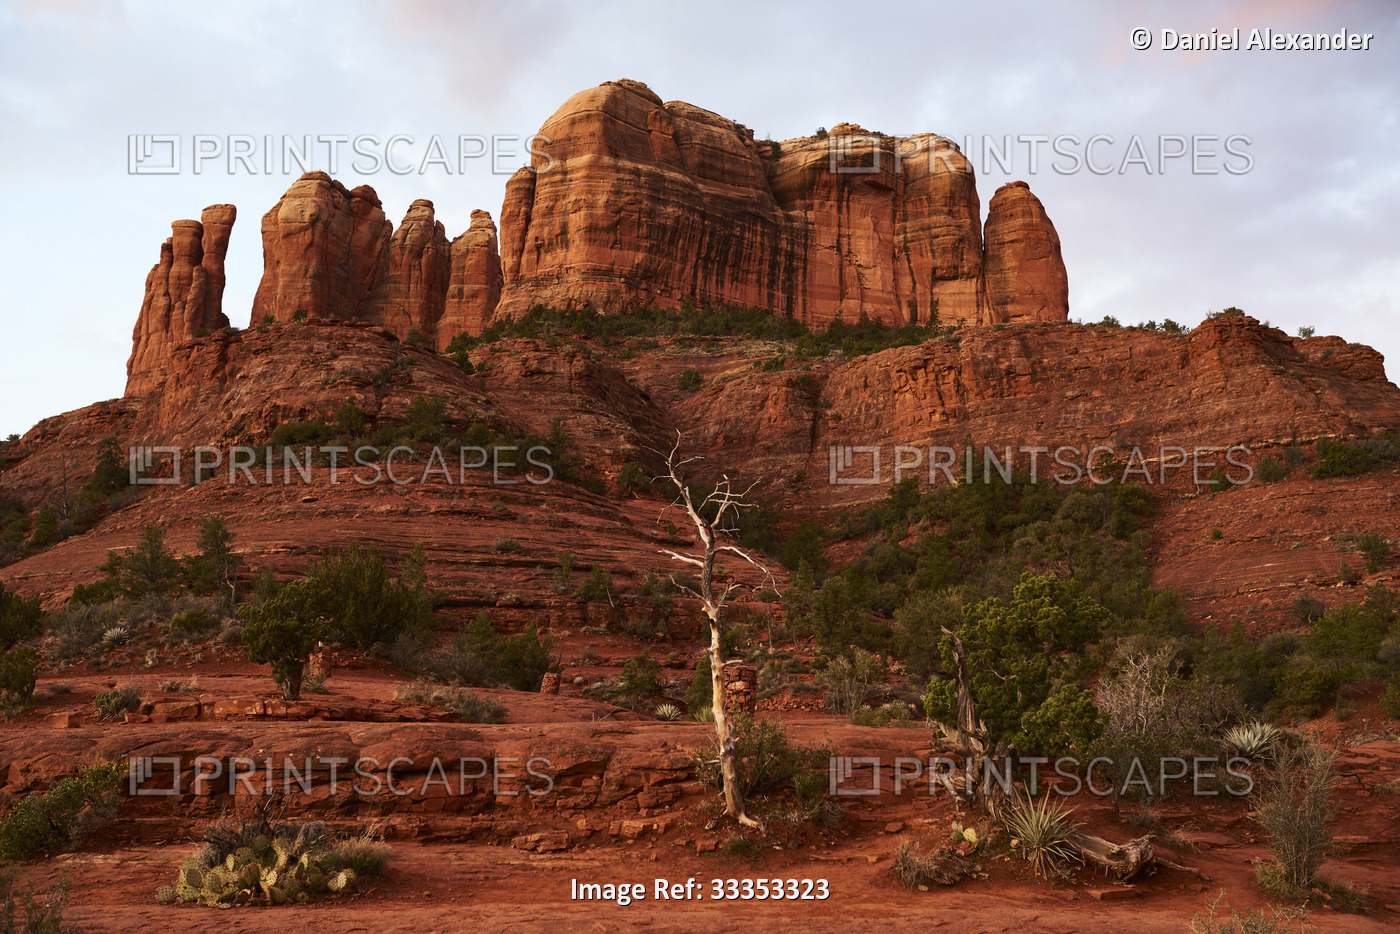 View of towering sandstone butte; Sedona, Arizona, United States of America